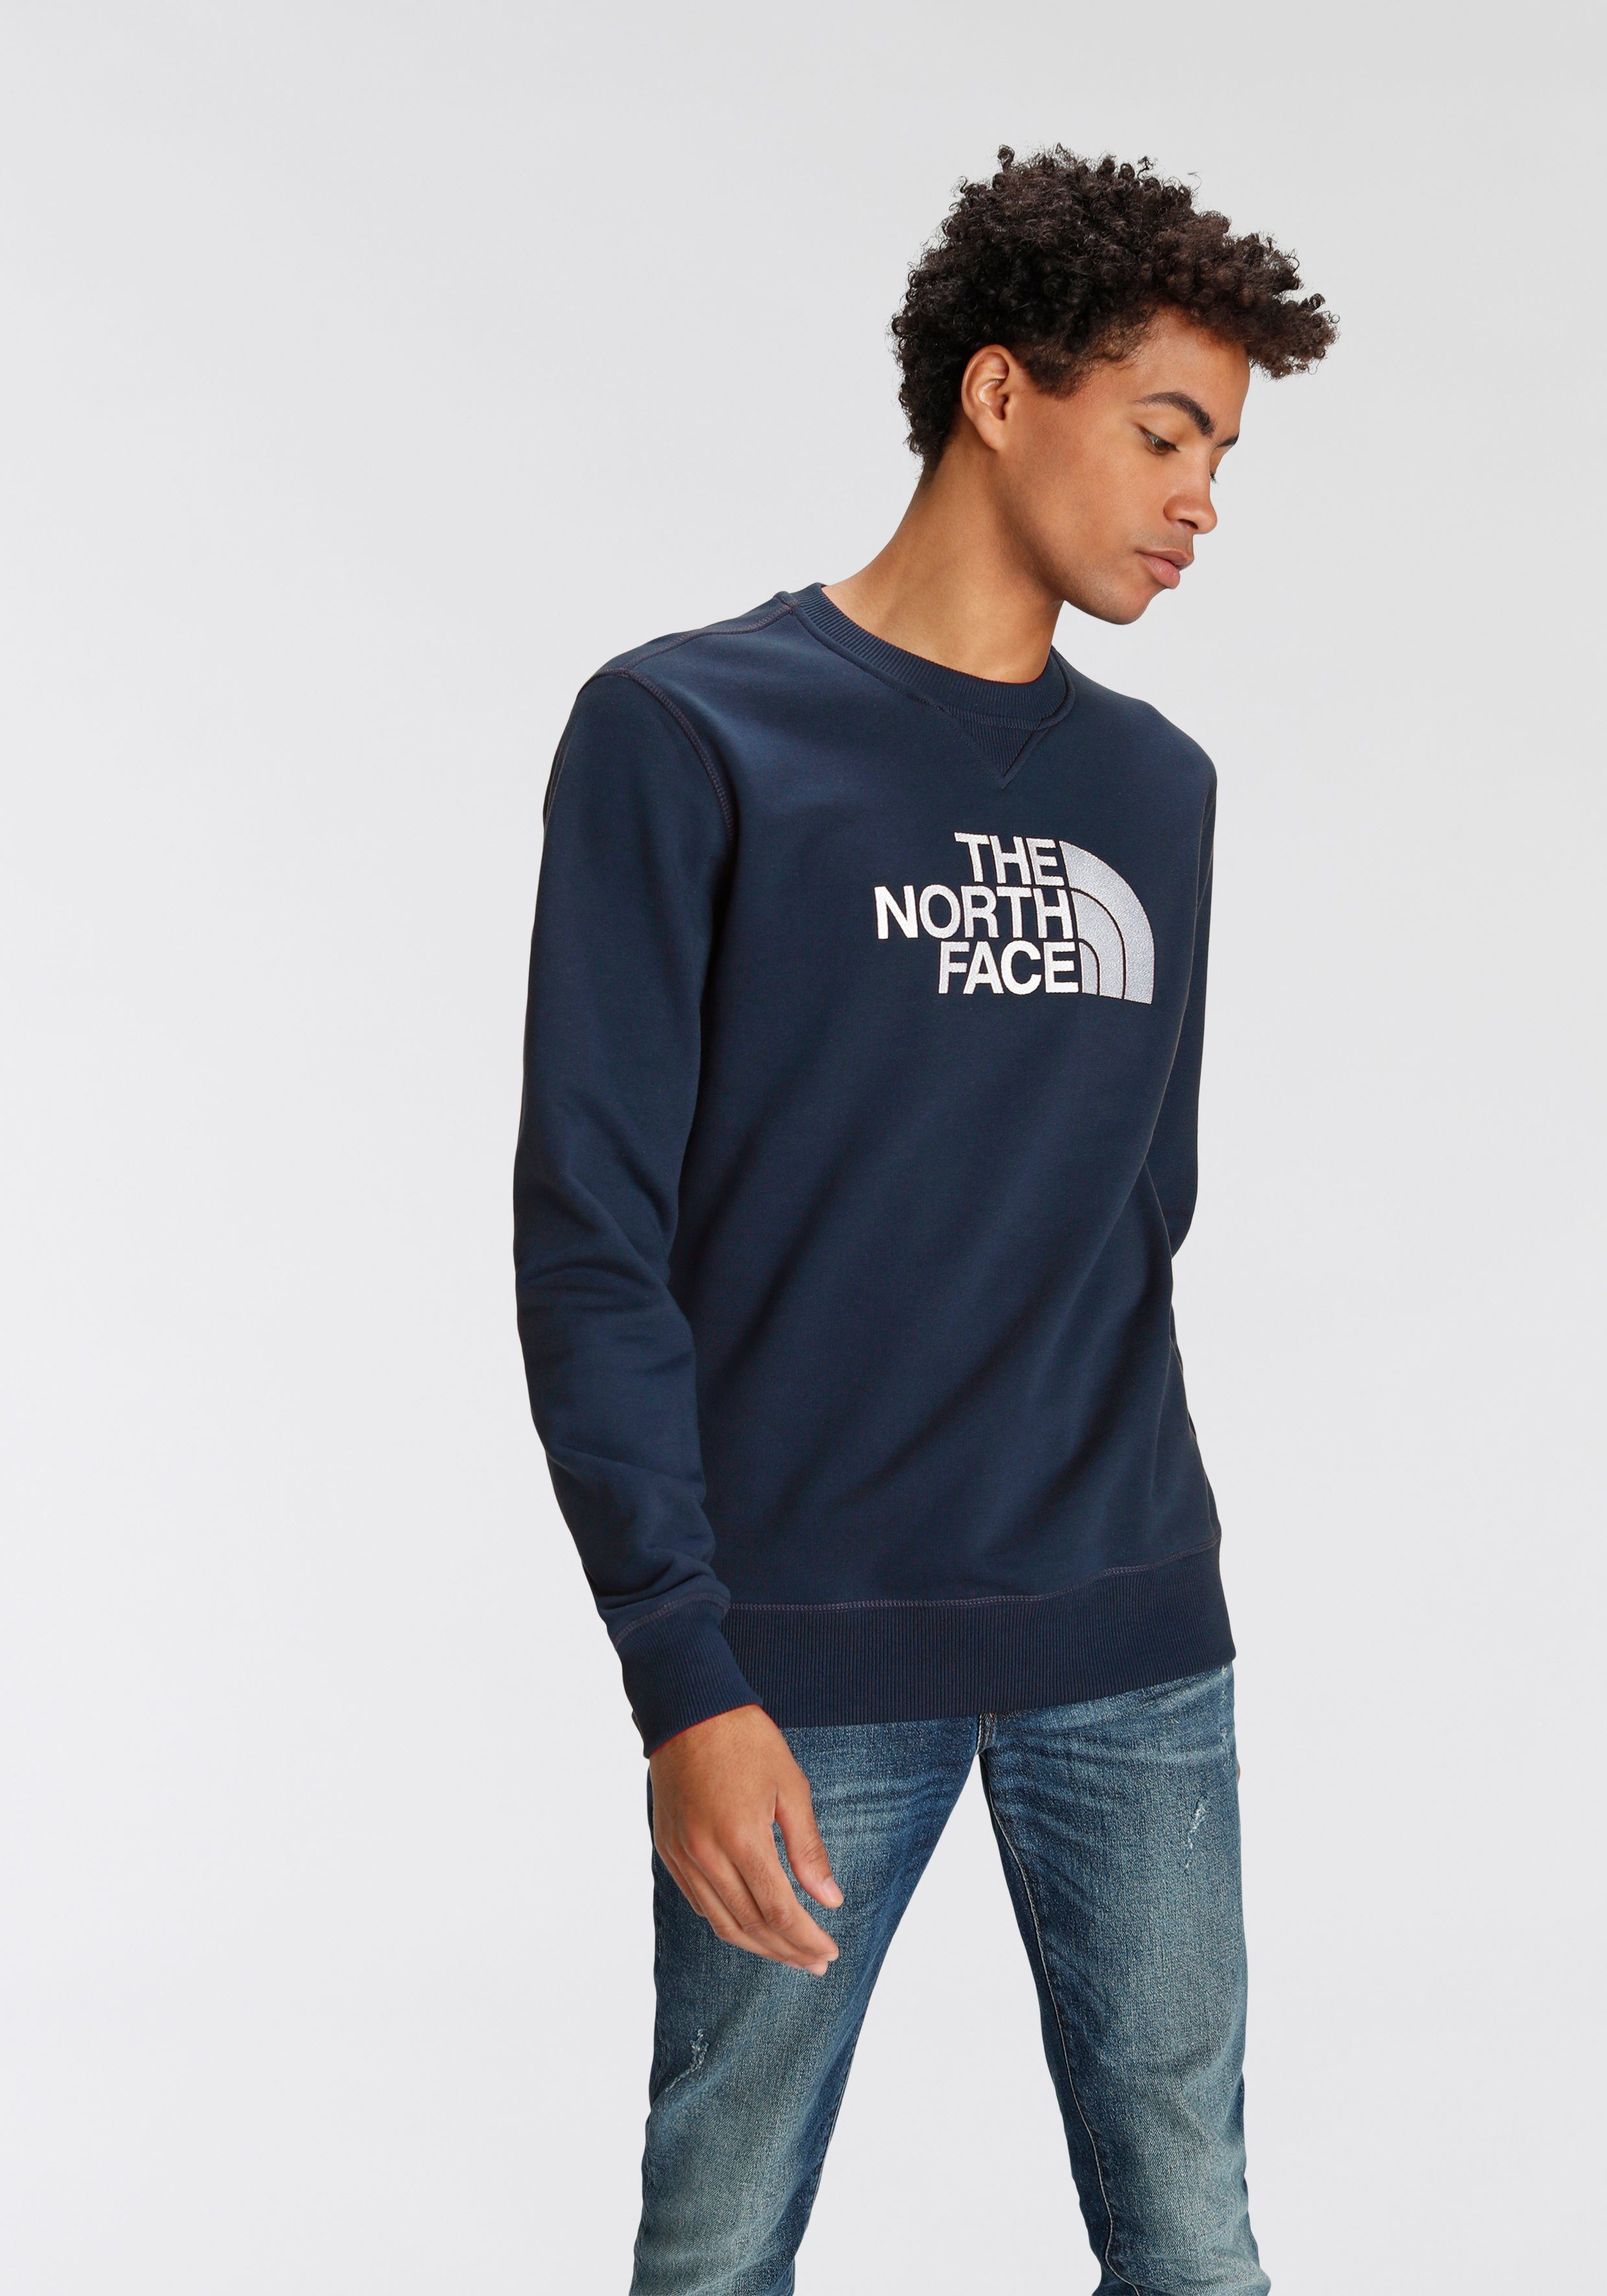 The Face North Sweatshirt marine DREW PEAK